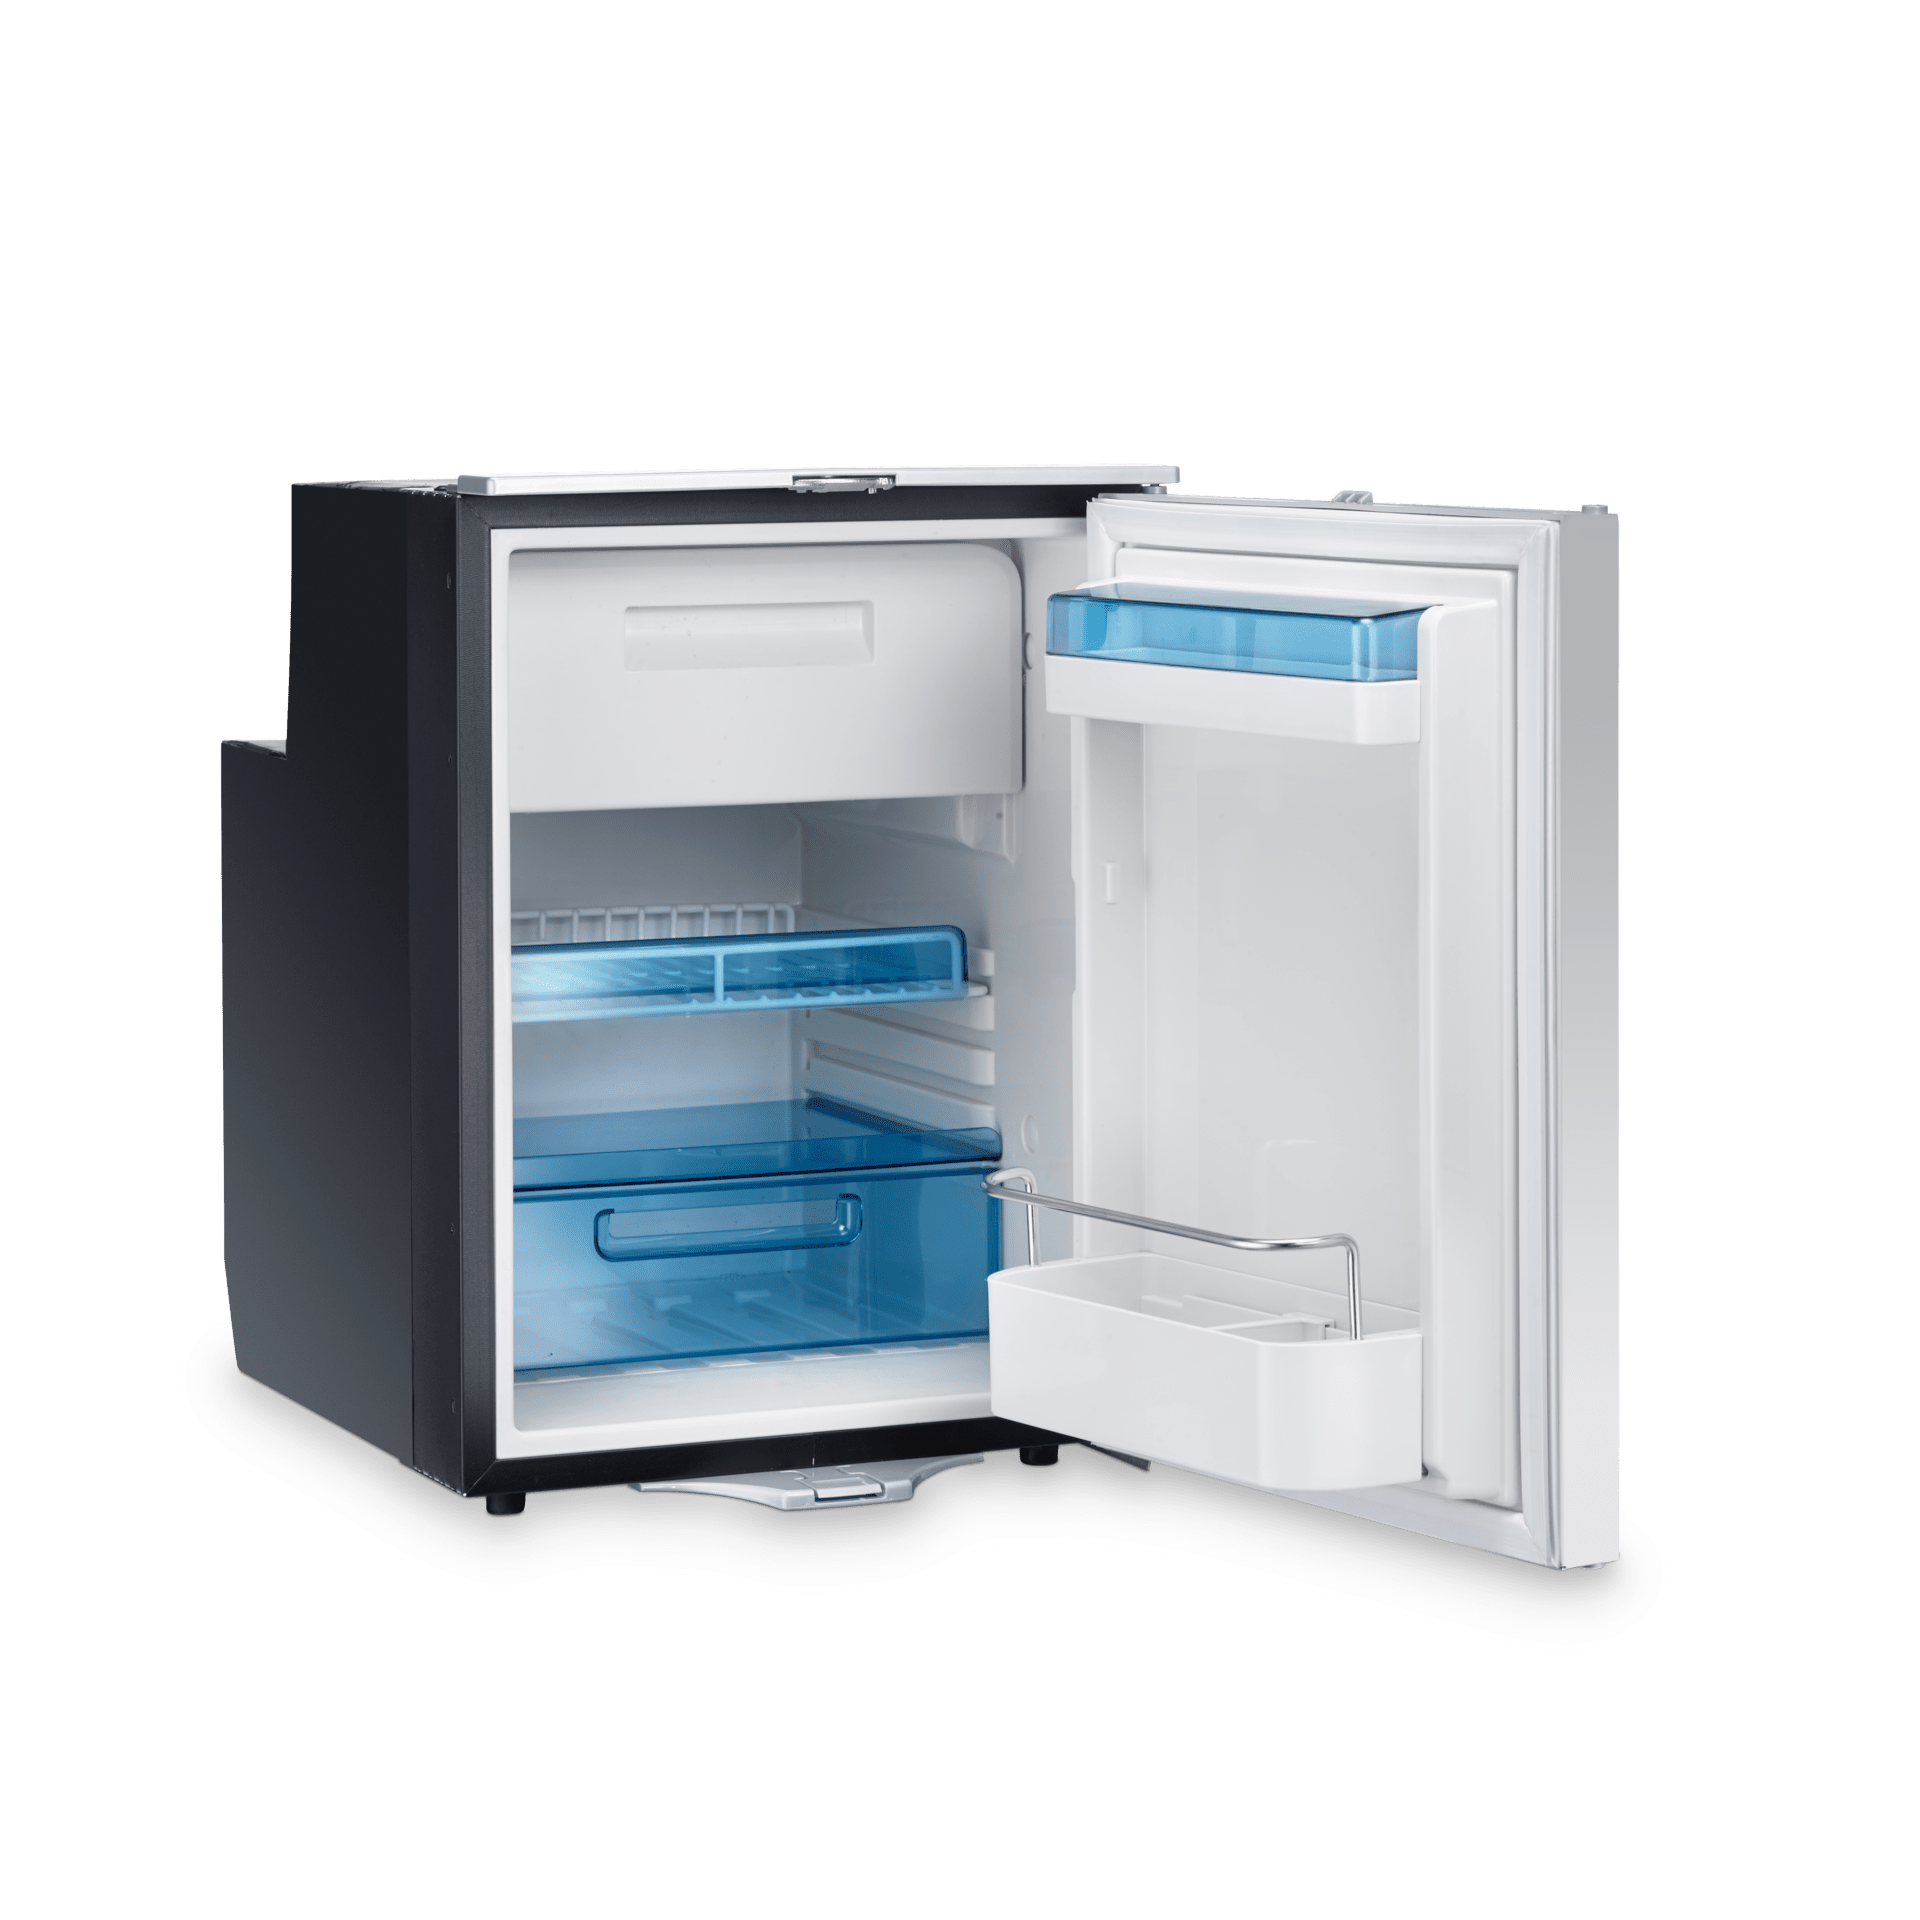 WAECO Mini Refrigerator Freezer 15 liters